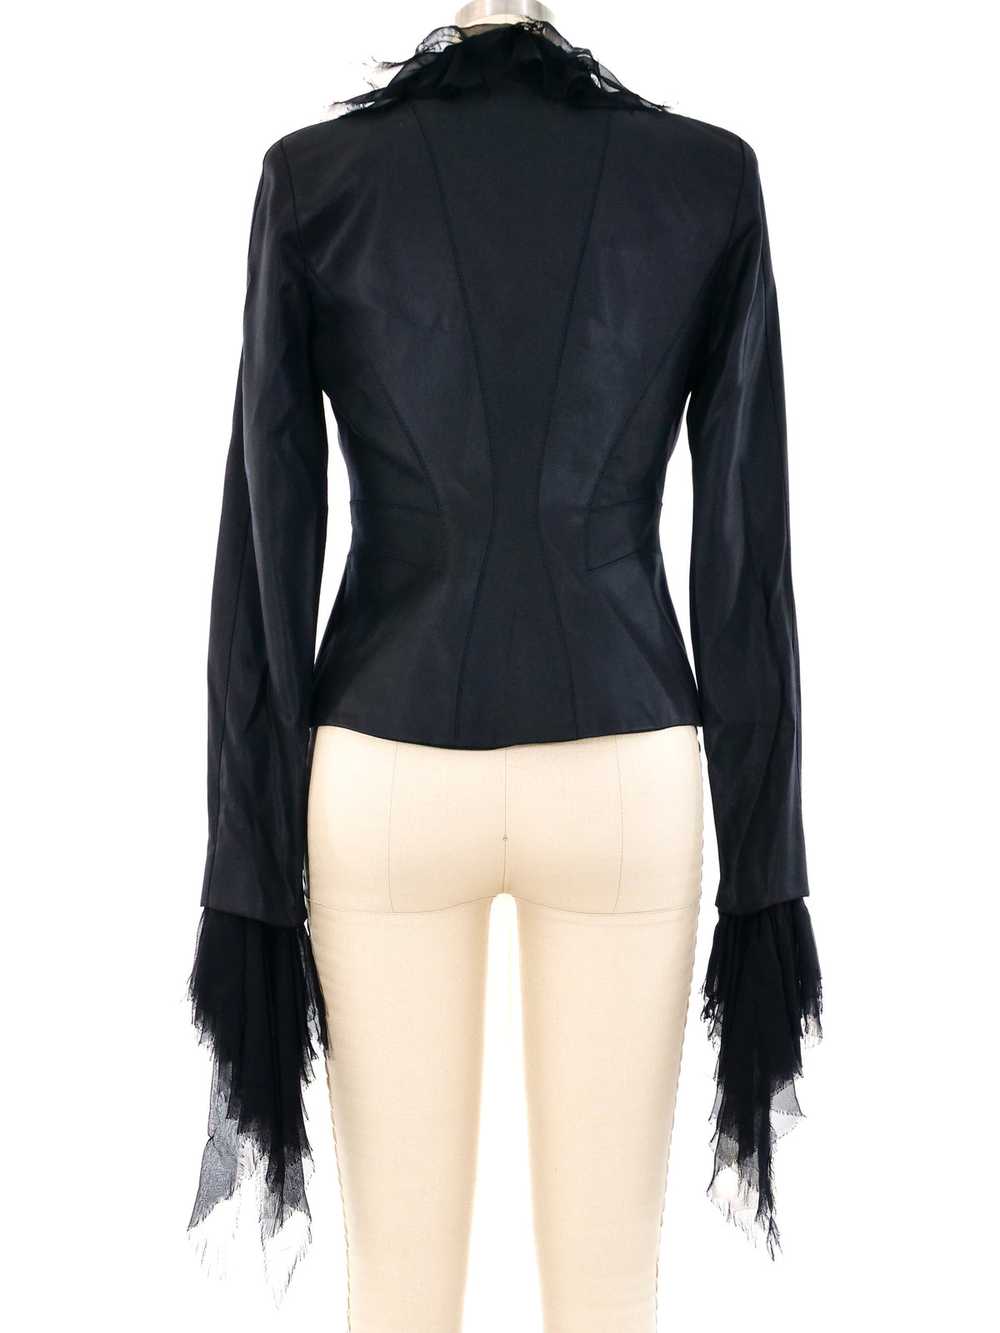 Gianni Versace Ruffle Trimmed Jacket - image 4